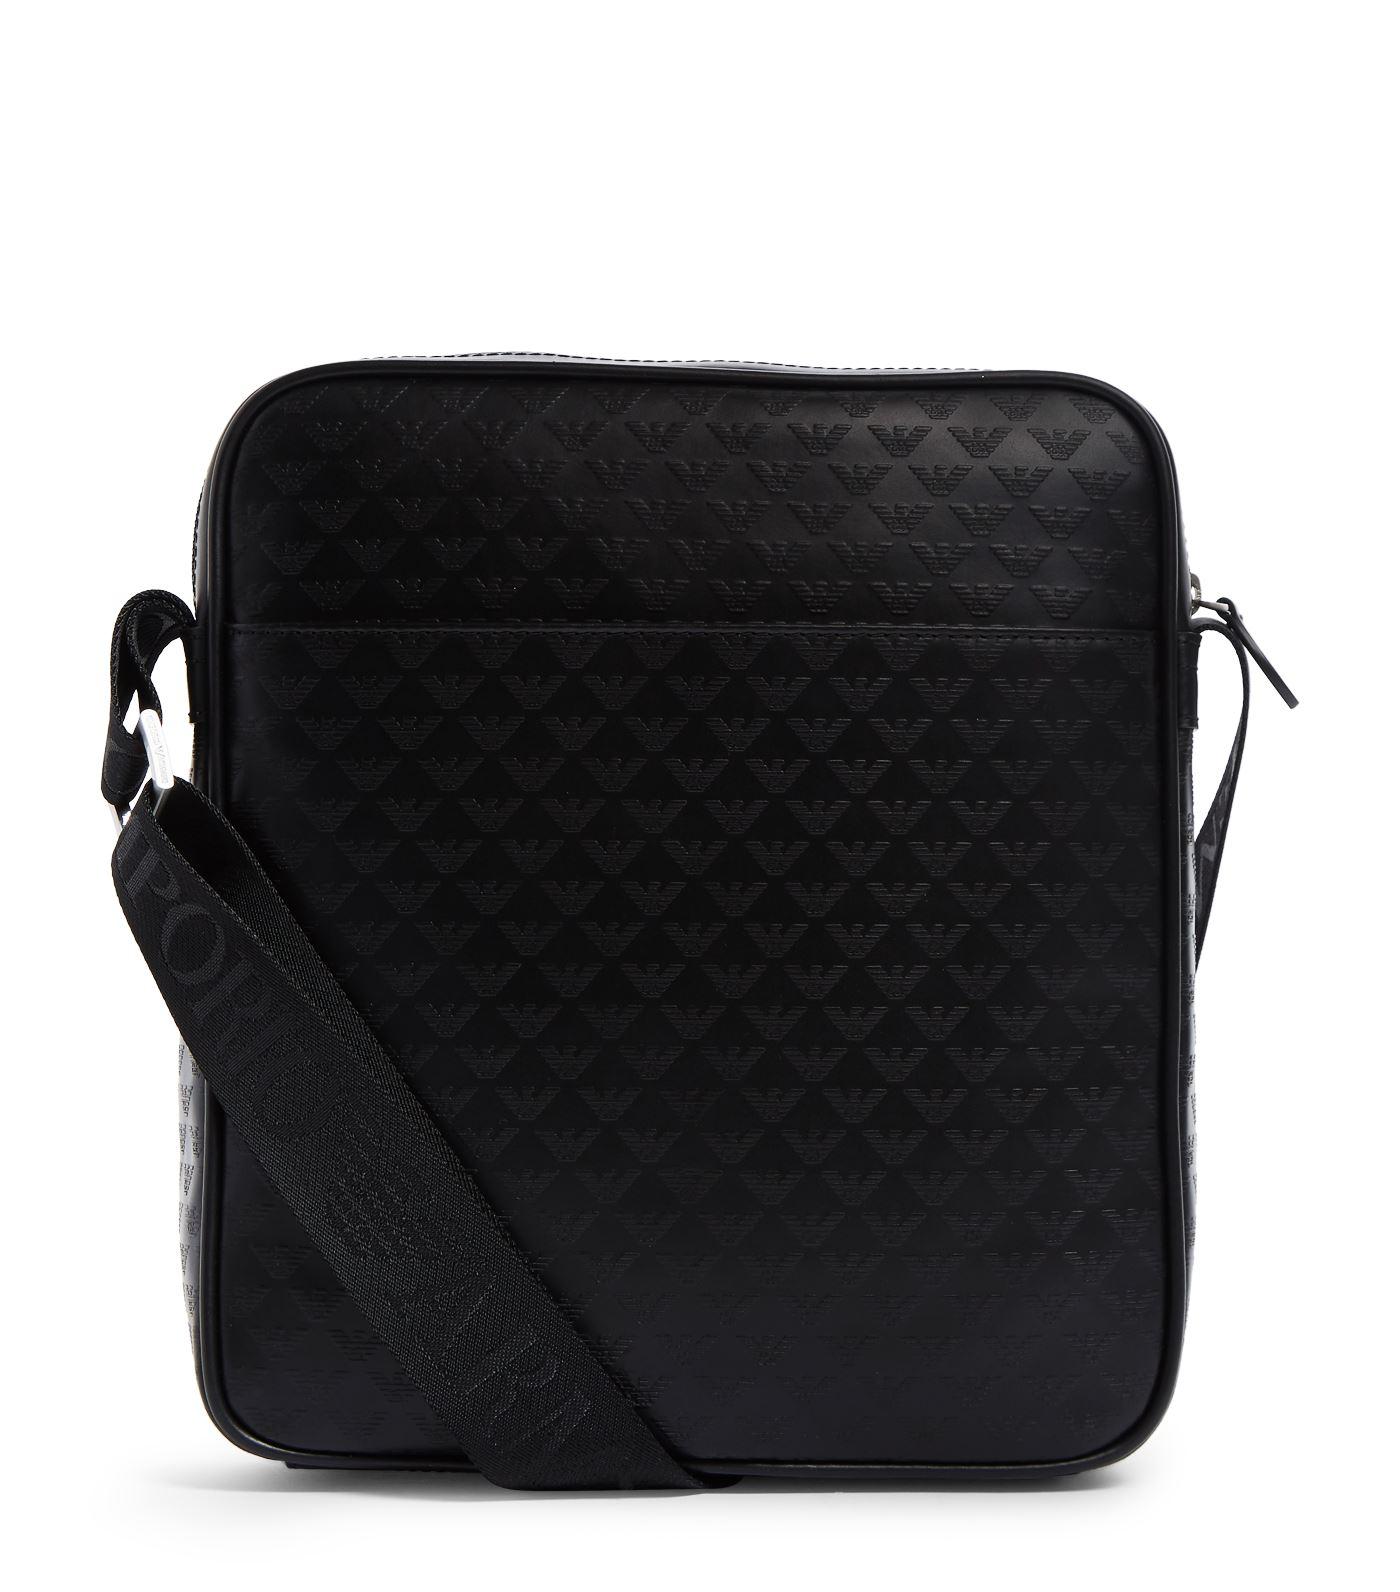 Emporio Armani Leather Eagle-embossed Messenger Bag in Black for Men - Lyst